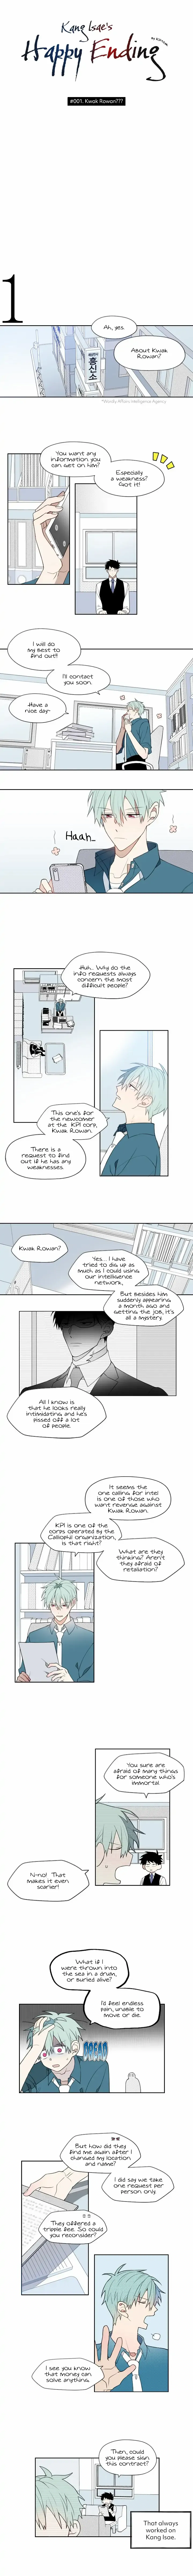 Kang Isae's Happy Ending - Page 3